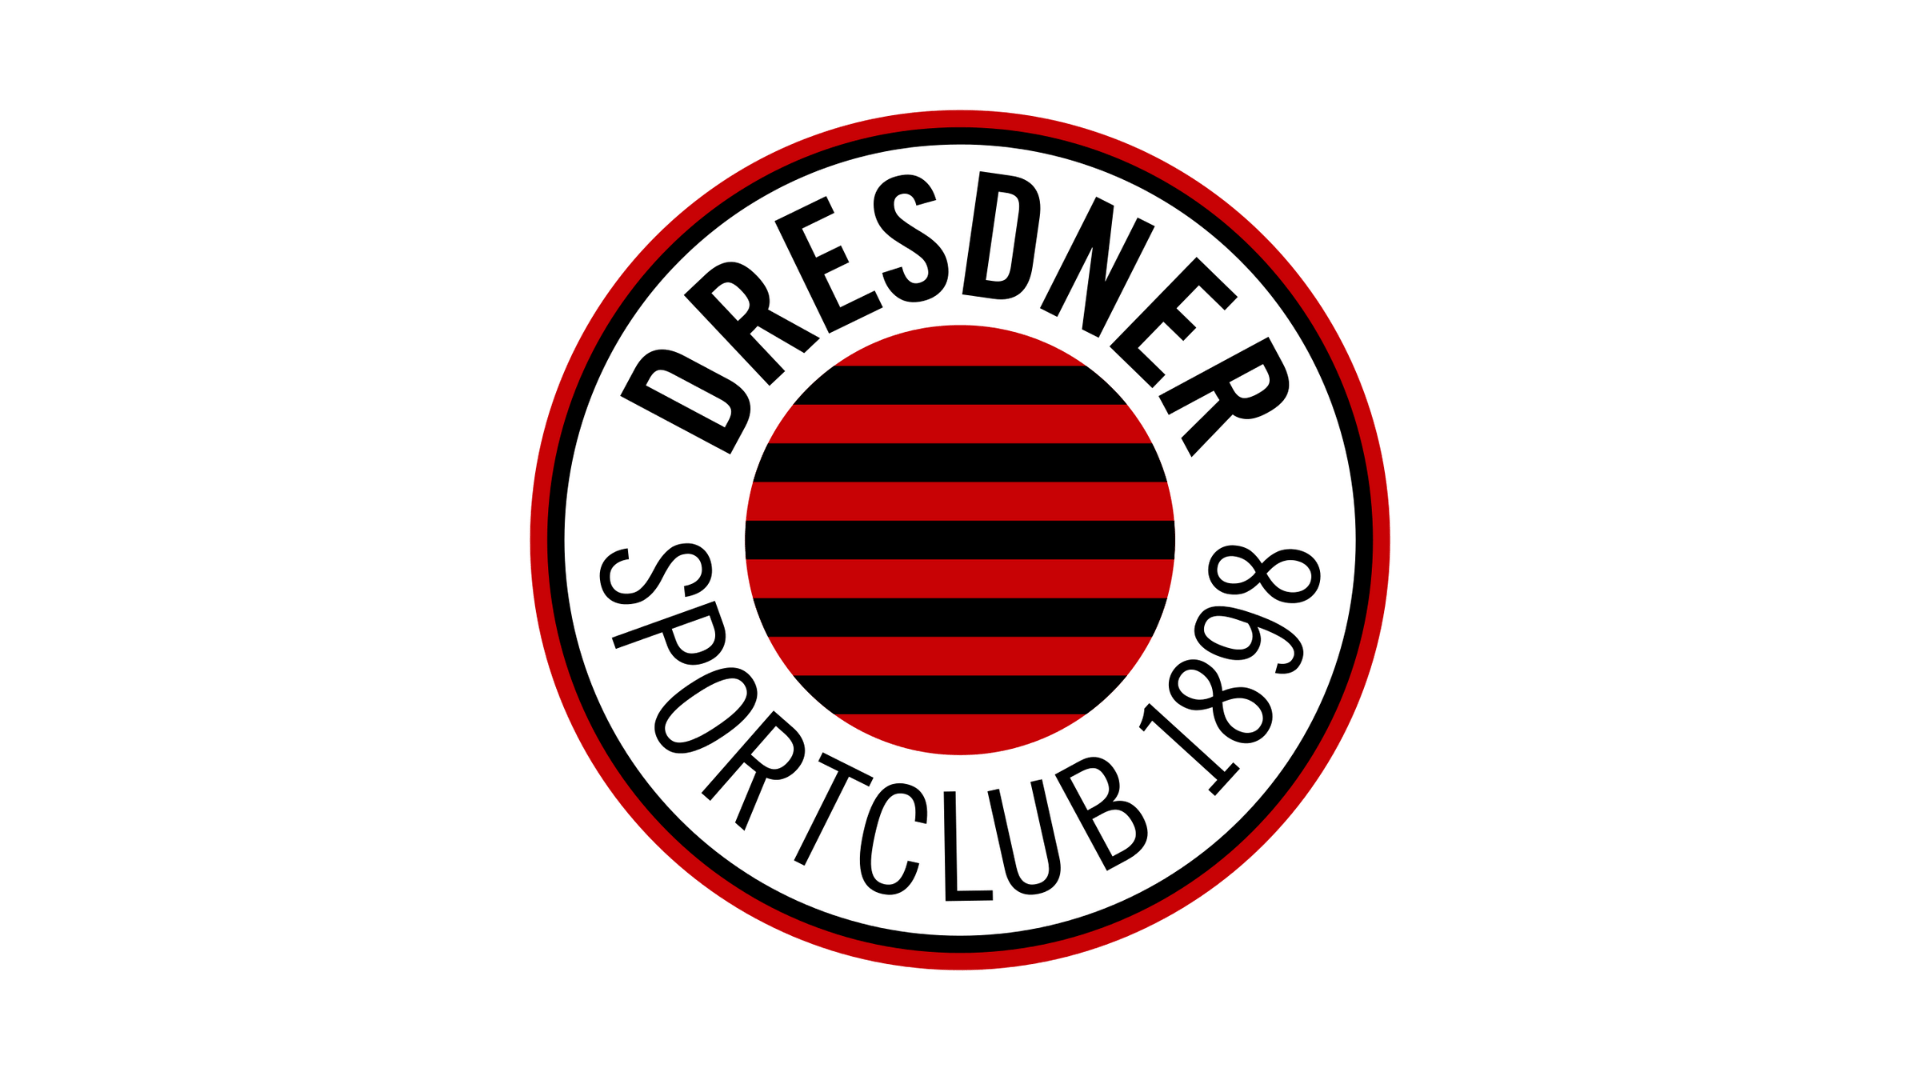 Dresdner Sportclub 1898